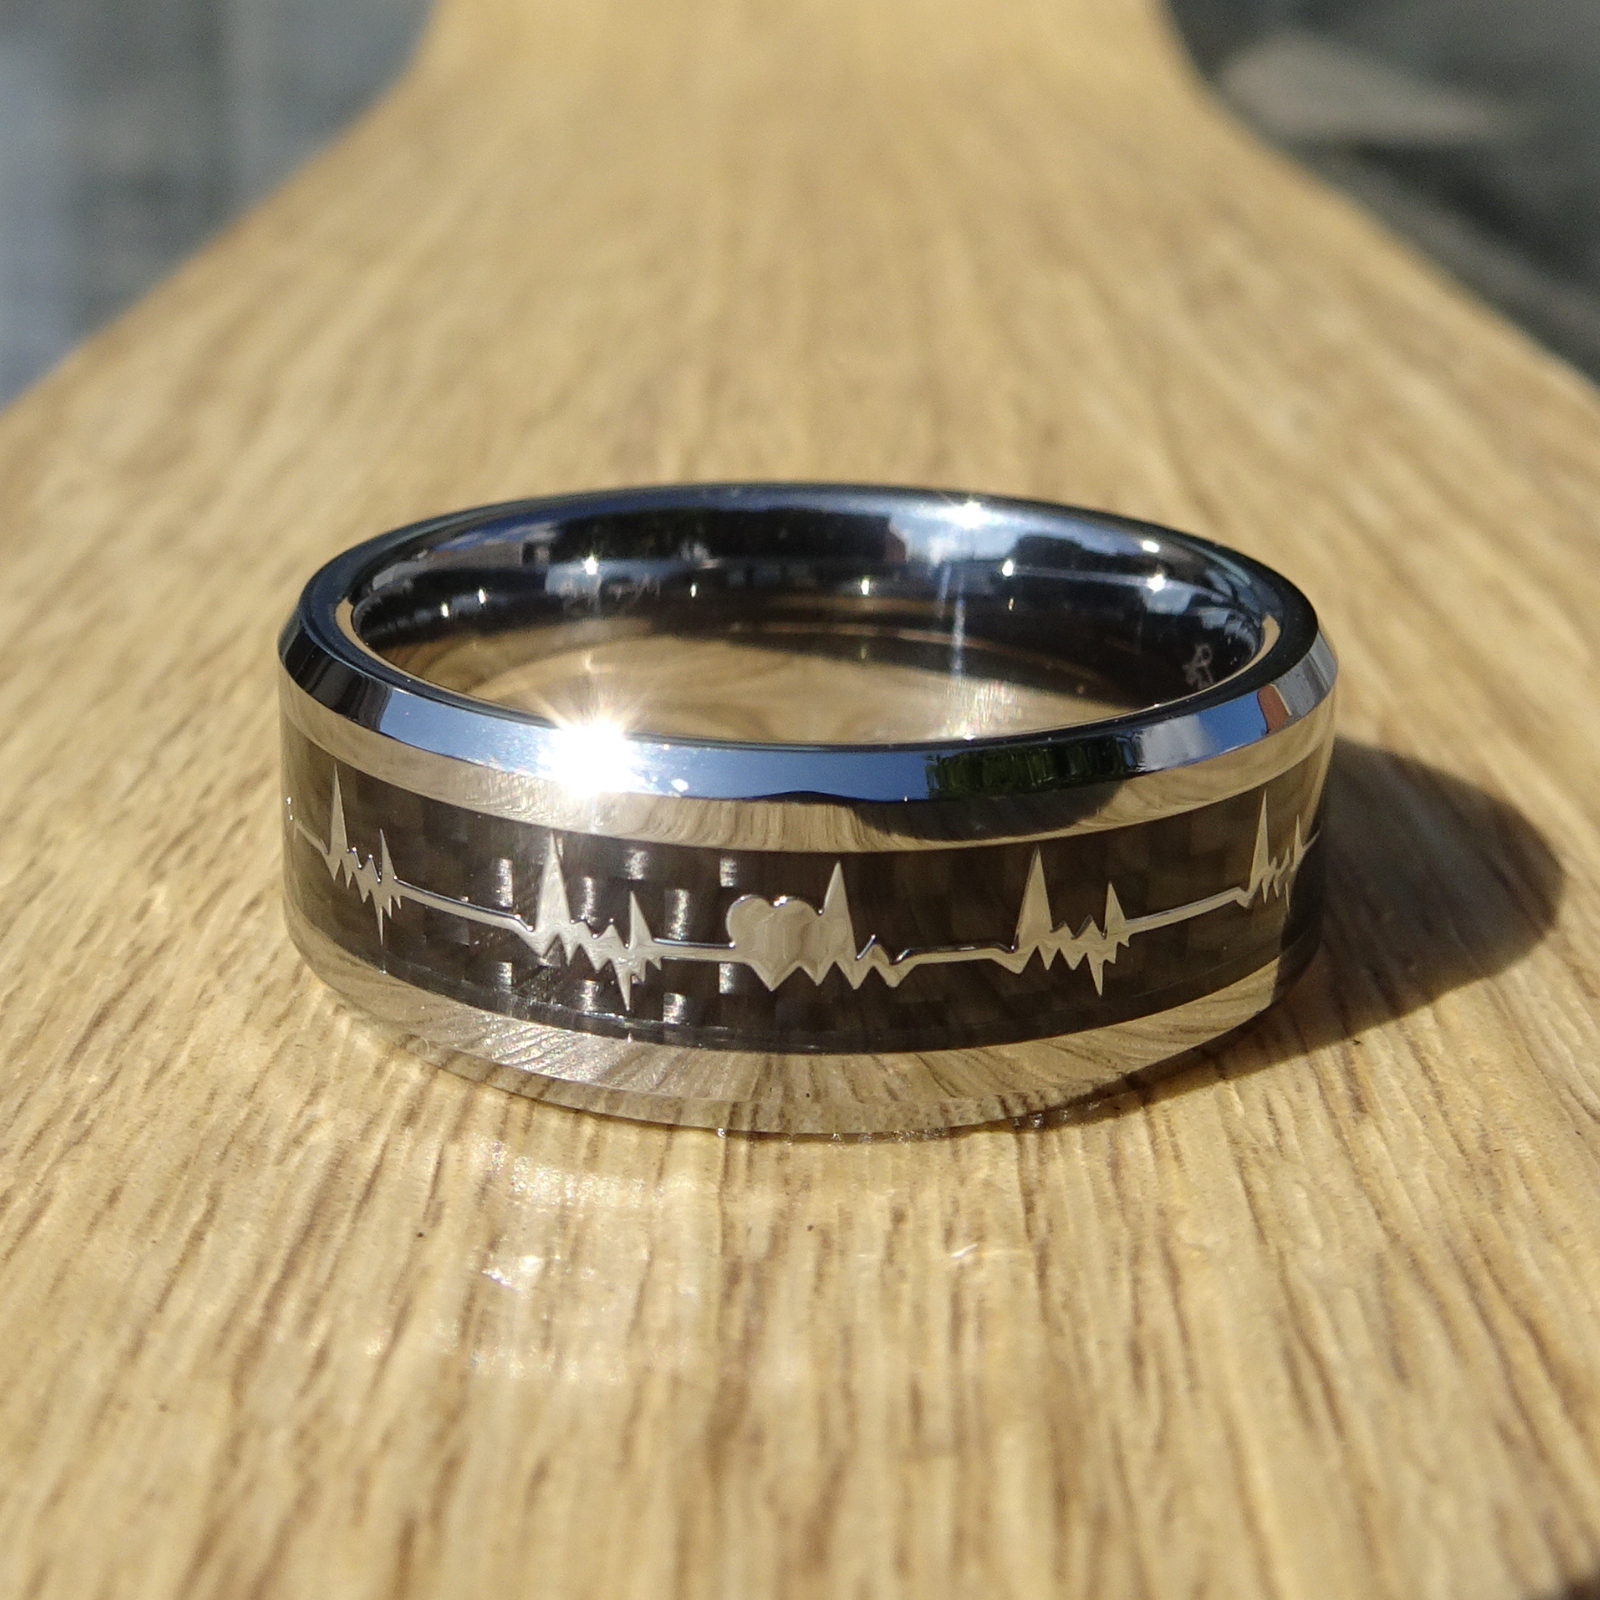 The Loving Heartbeat 8mm Wonder Ring